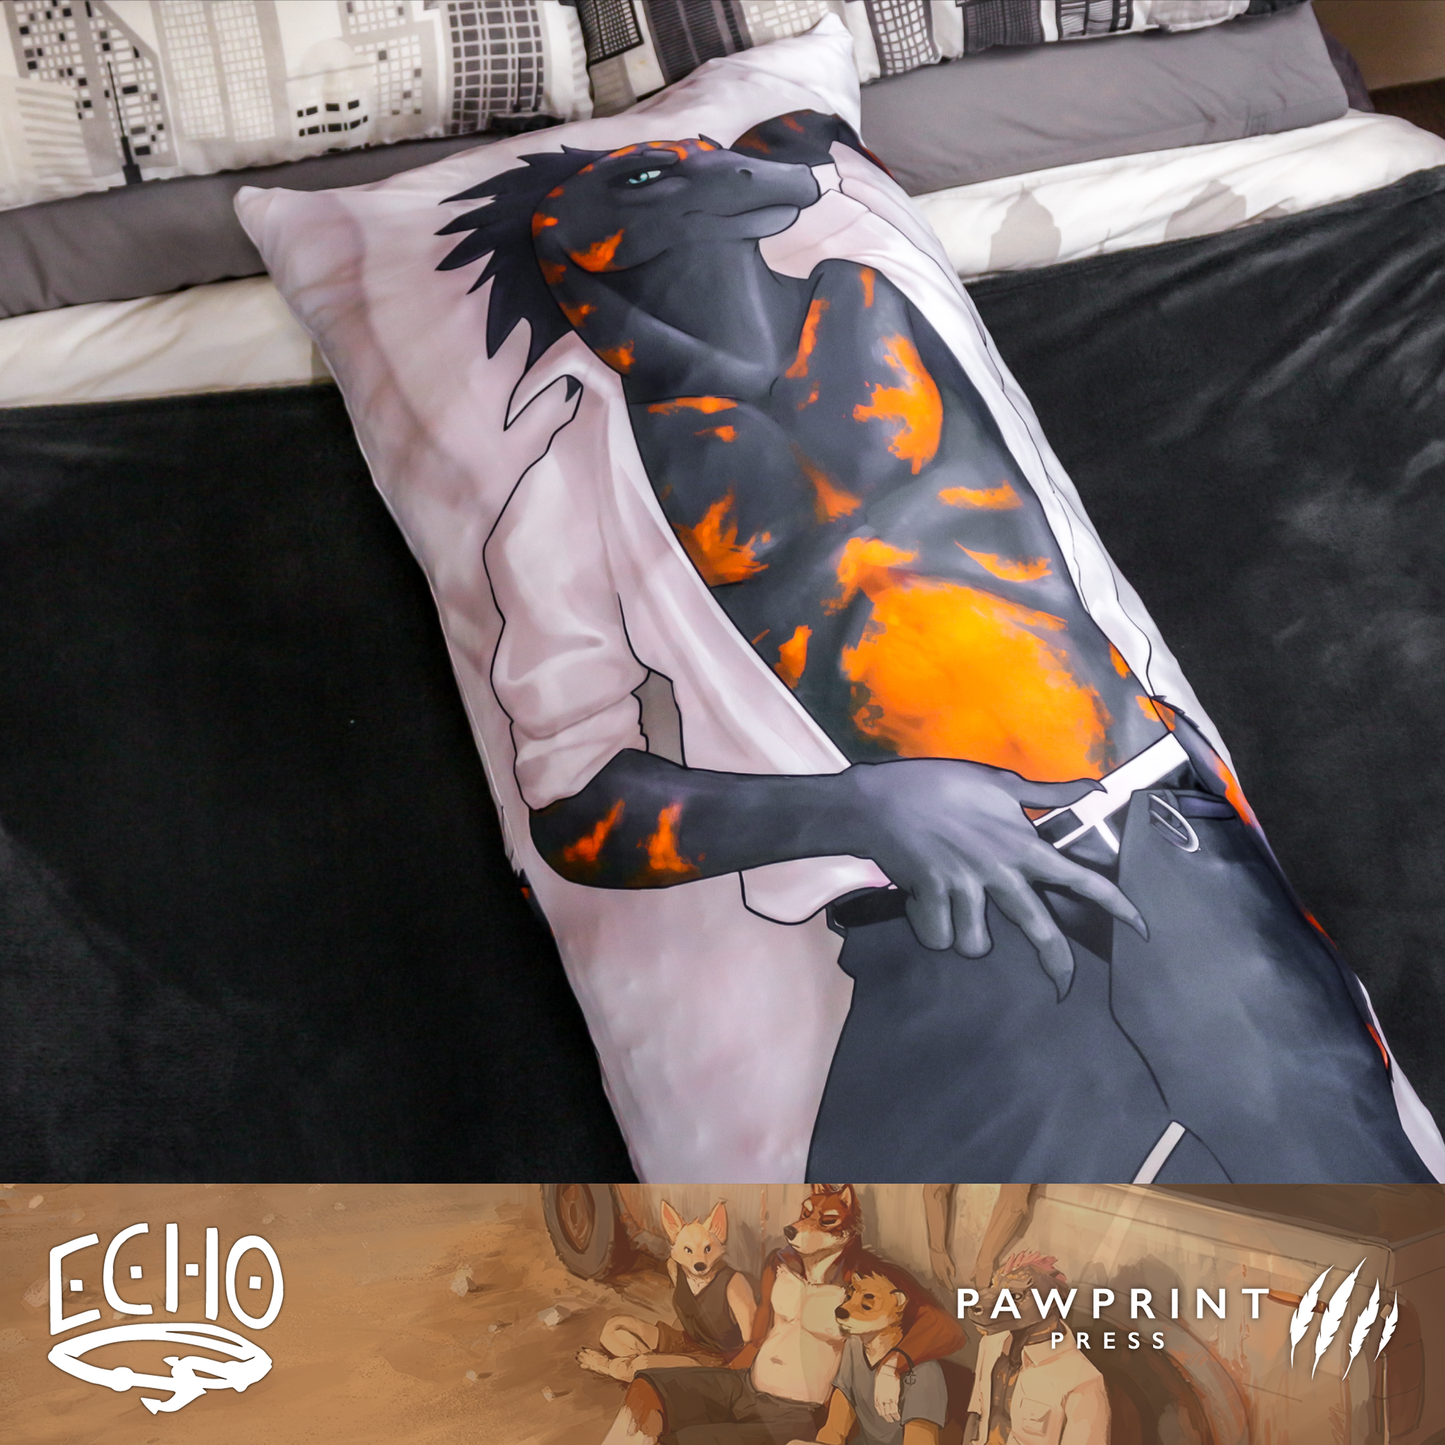 Echo: Flynn Dakimakura Body Pillow Cover